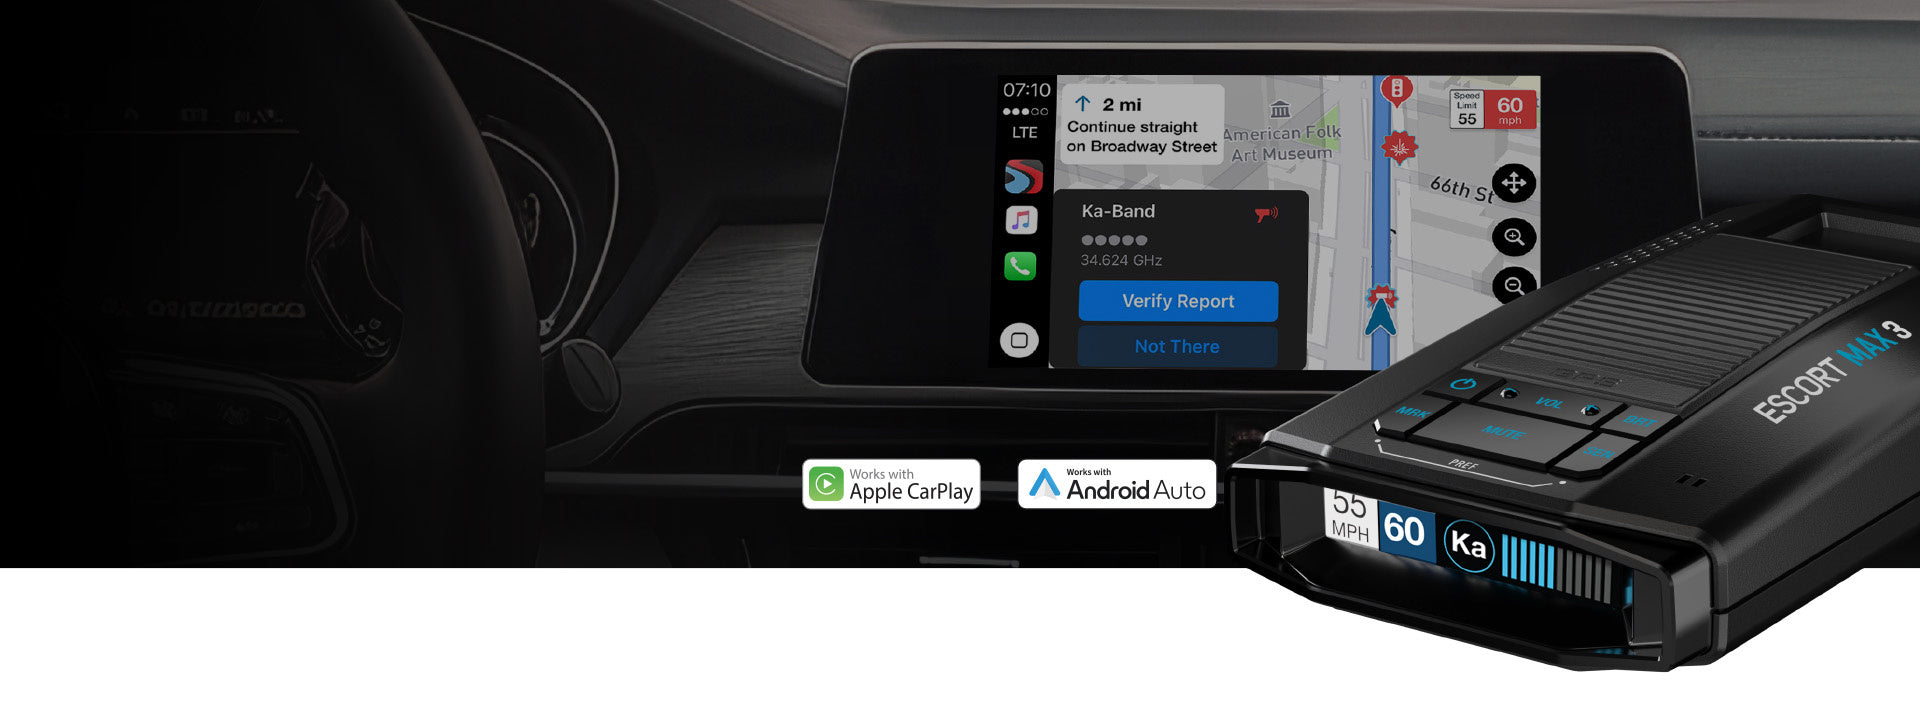 Escort drive smarter android auto apple carplay MAX 3 hero banner